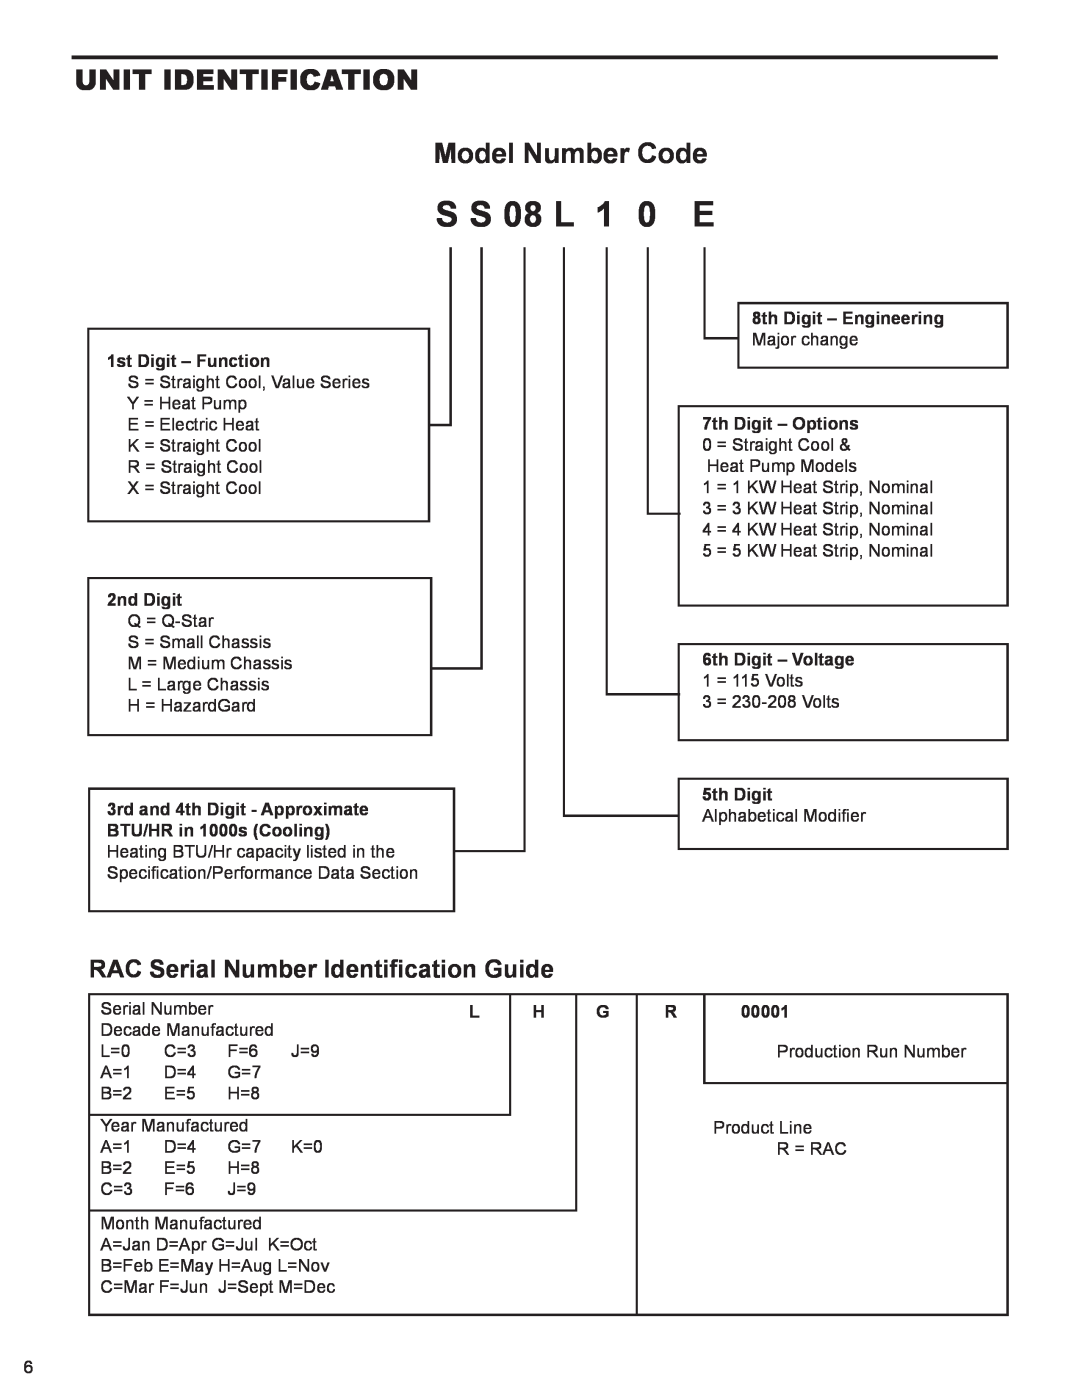 Friedrich 2008 S S 08 L 1 0 E, Unit Identification Model Number Code, RAC Serial Number Identification Guide, 2nd Digit 